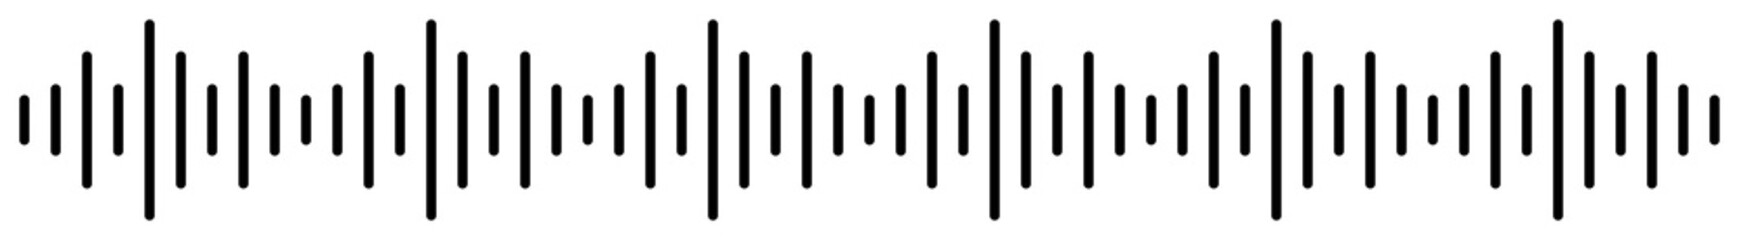 Sound Wave Music Volume Icon Symbol for Logo, Apps, Pictogram, Website or Graphic Design Element. Format PNG